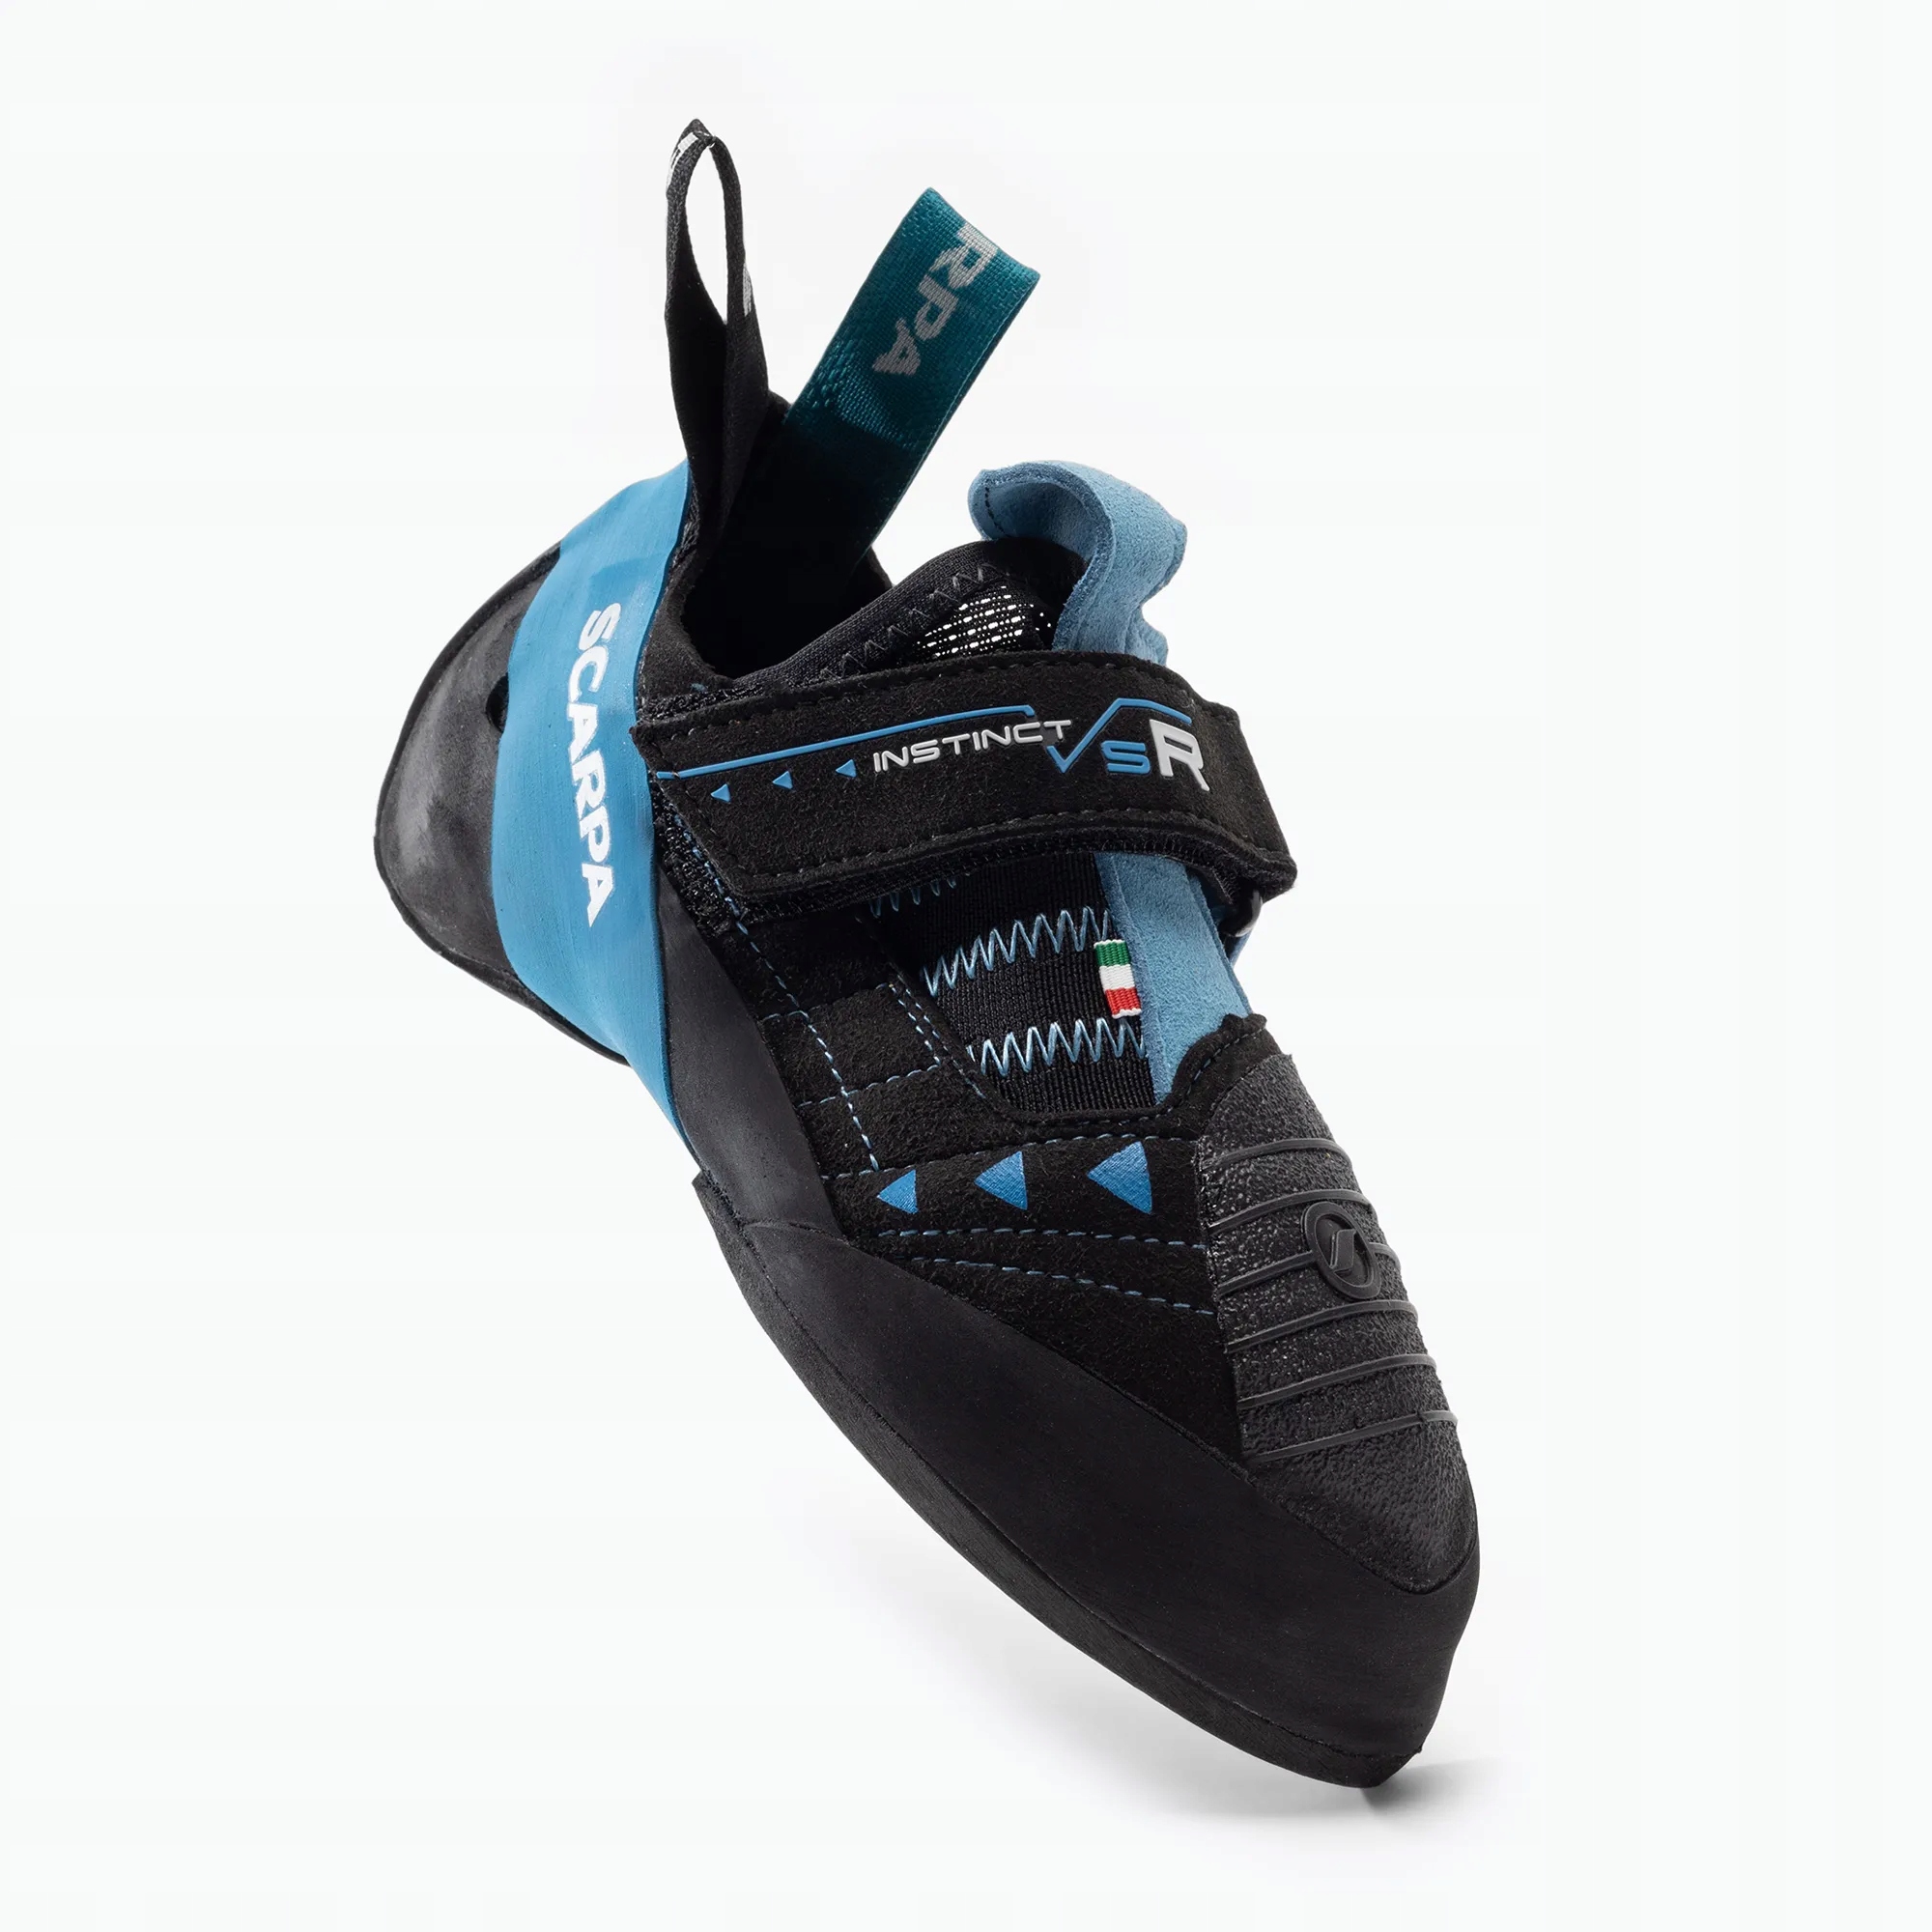 Lezecká obuv SCARPA Instinct VSR black/azure 41